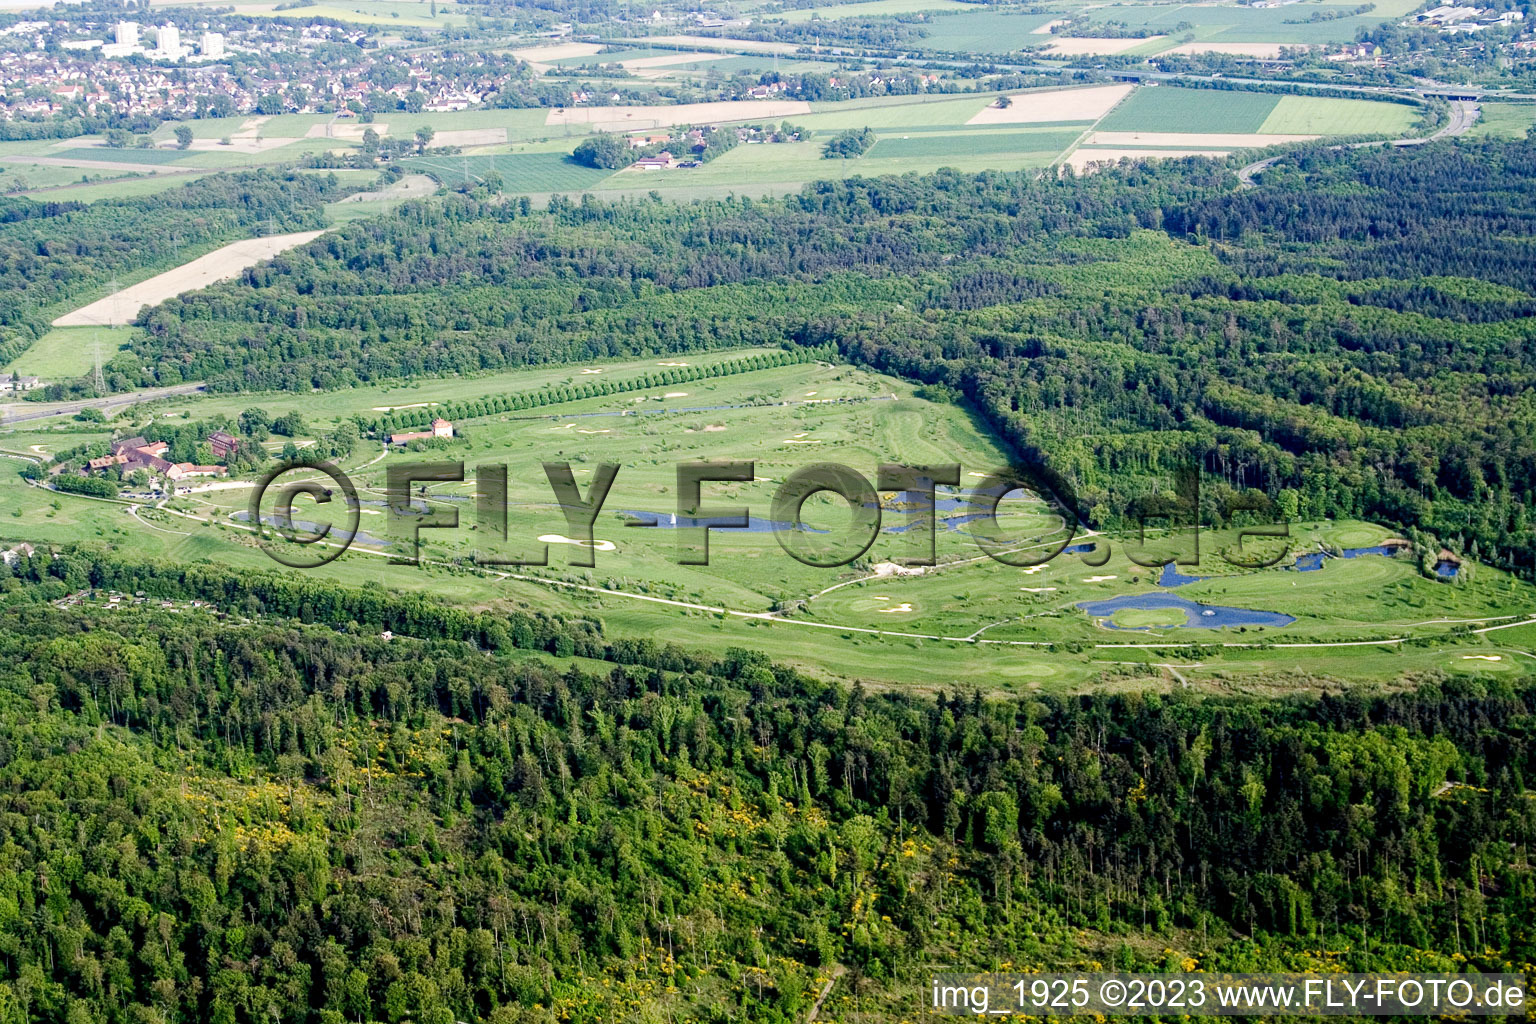 Vue aérienne de Terrain de golf Gut Scheibenhard à le quartier Beiertheim-Bulach in Karlsruhe dans le département Bade-Wurtemberg, Allemagne